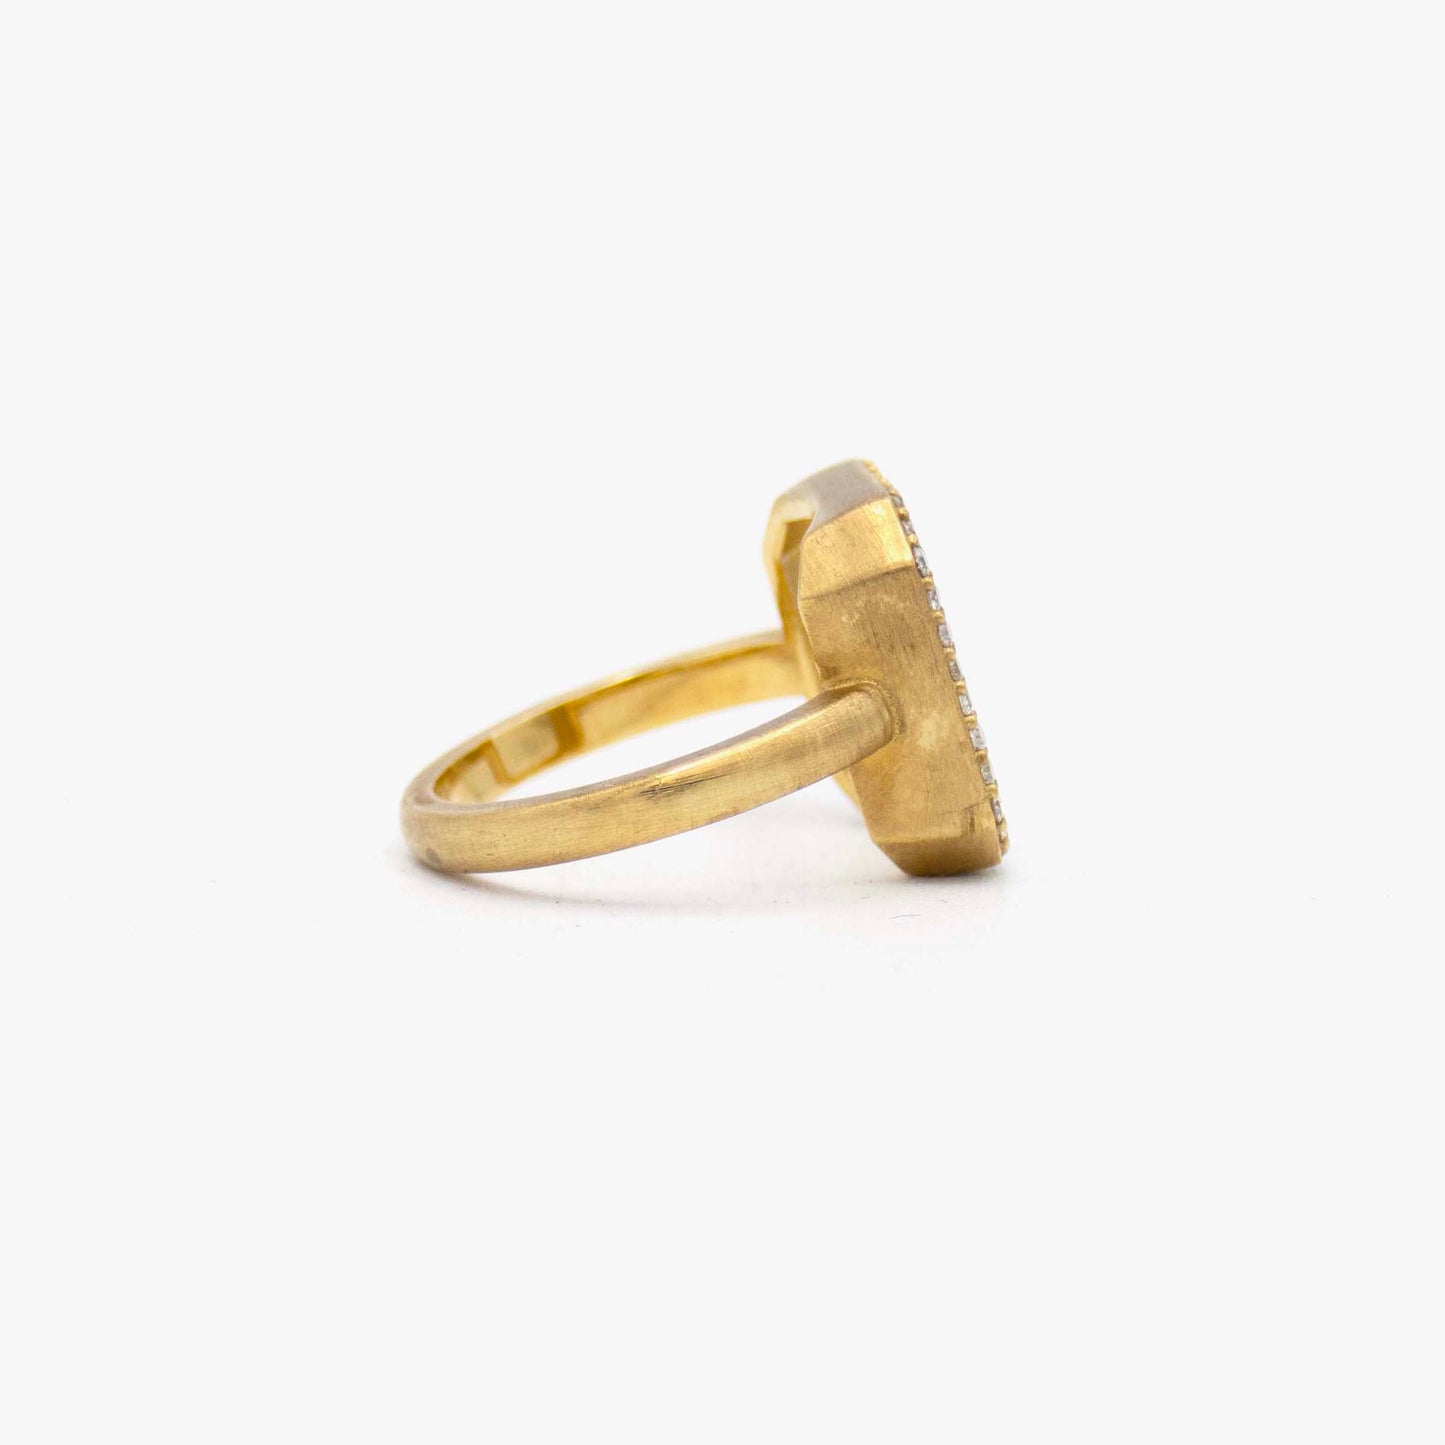 Irit Design 10K Gold Square and Diamond Ring